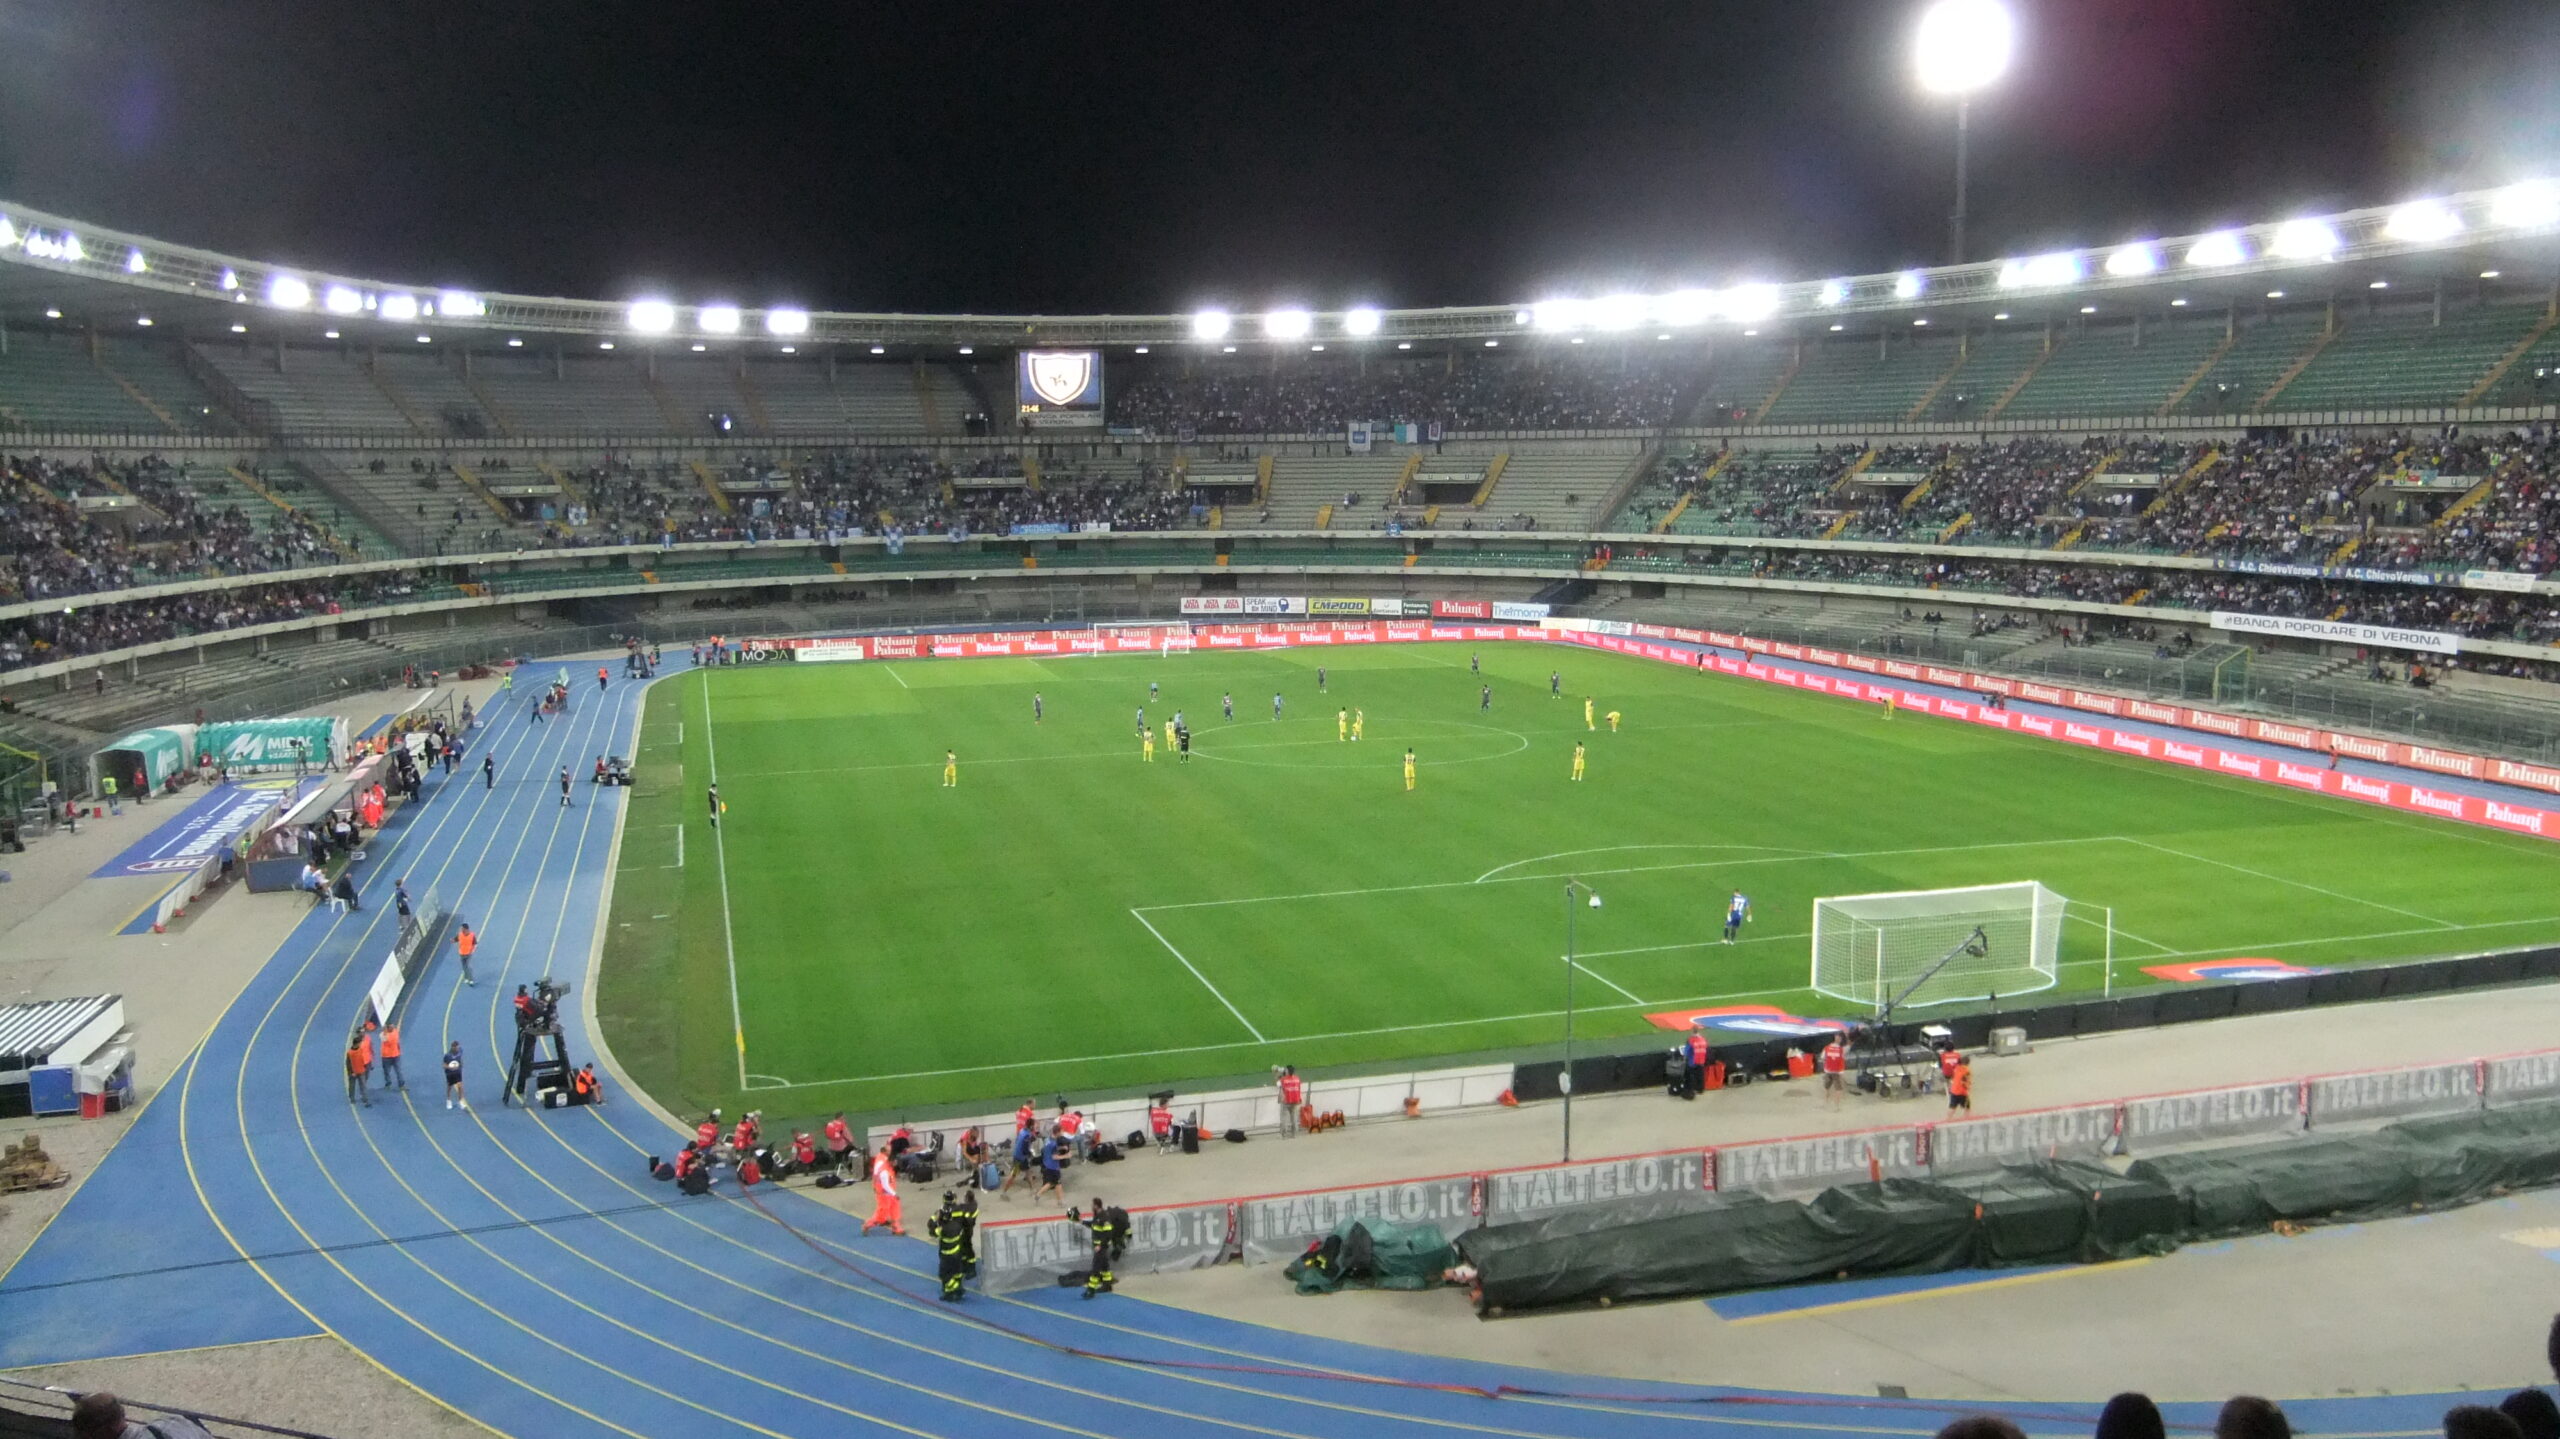 Stadio Bentegodi di Verona, teatro del derby tra Hellas e Chievo